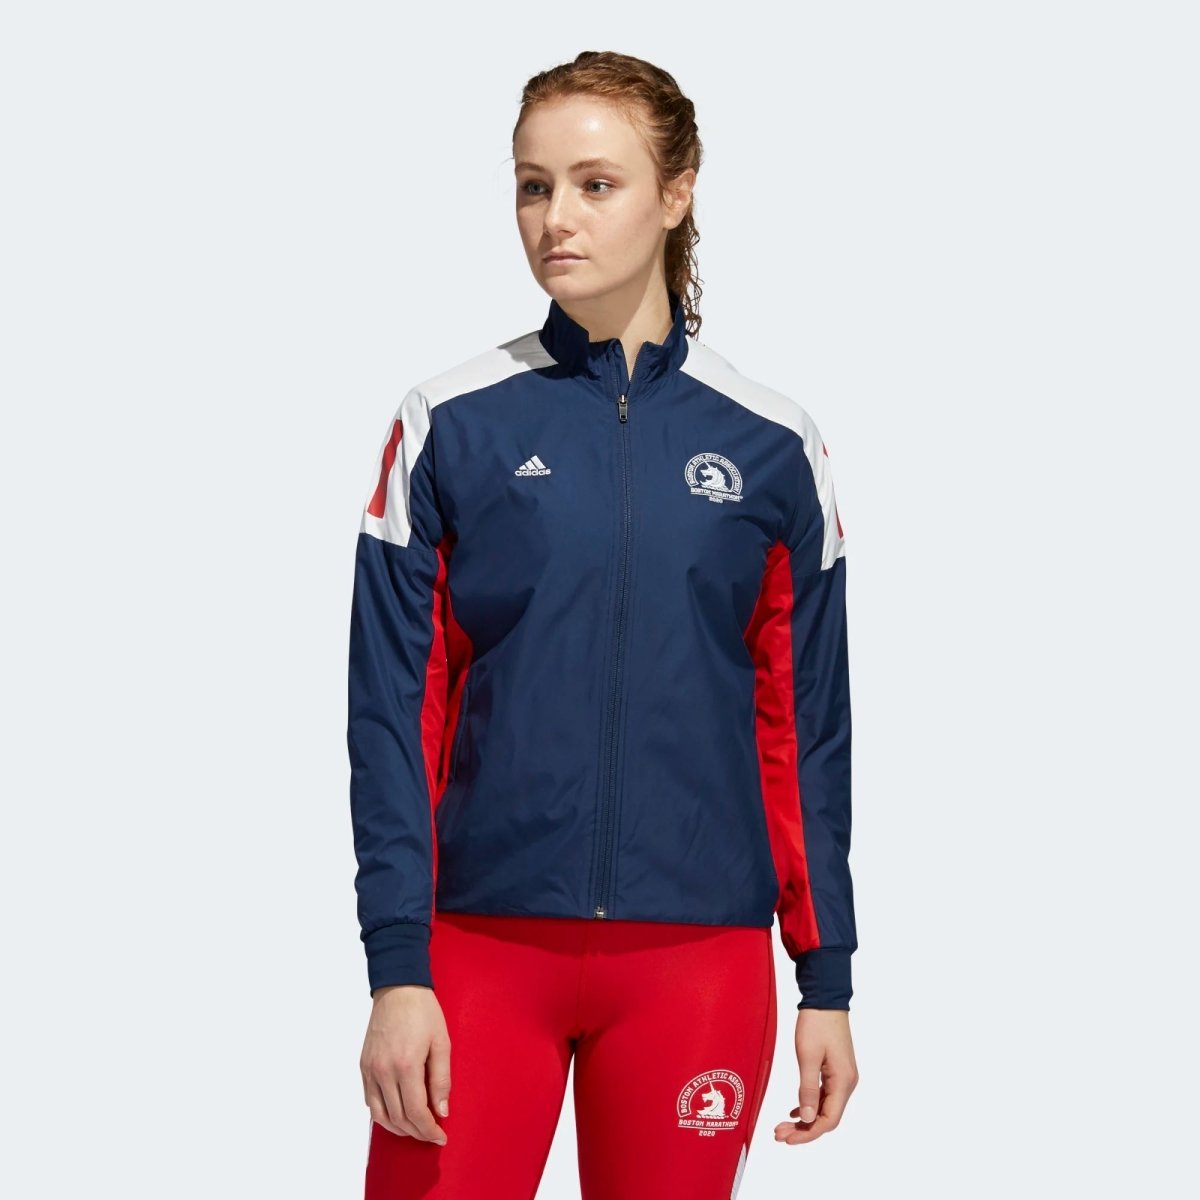 Women's adidas 2020 Marathon Celebration Jacket - Bauman's Running & Walking Shop